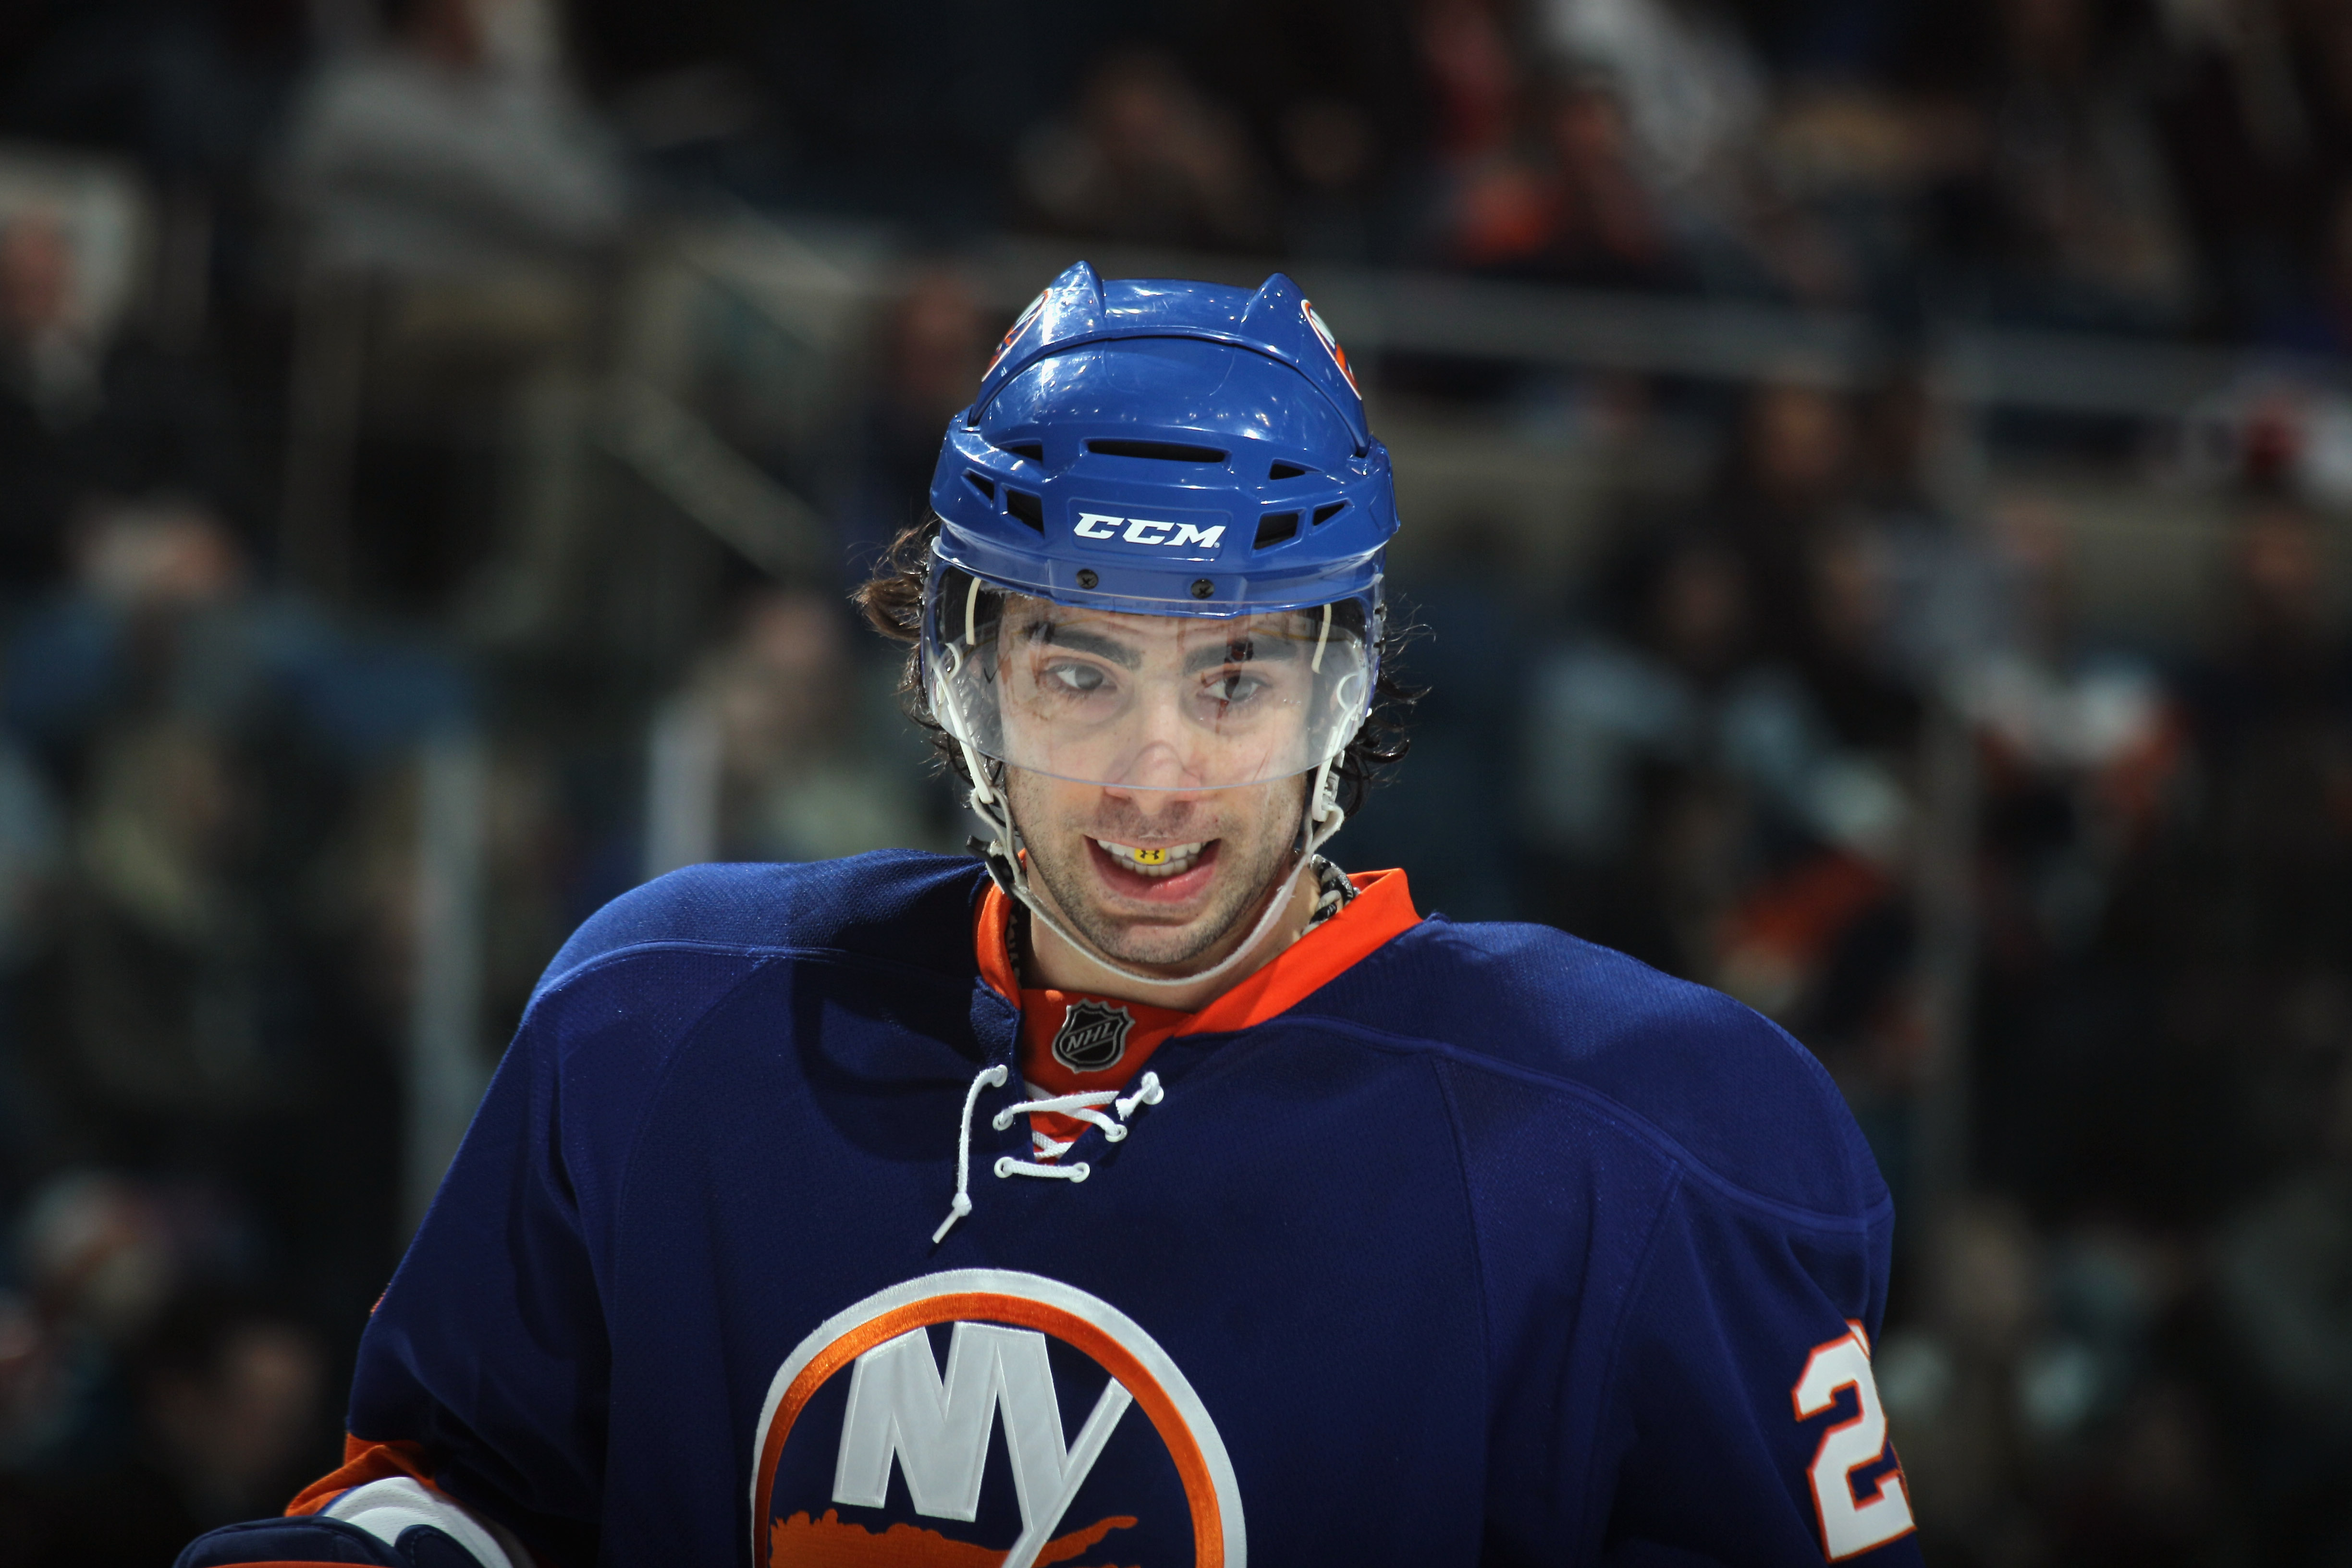 VIDEO: One-on-one with New York Islanders winger Matt Moulson